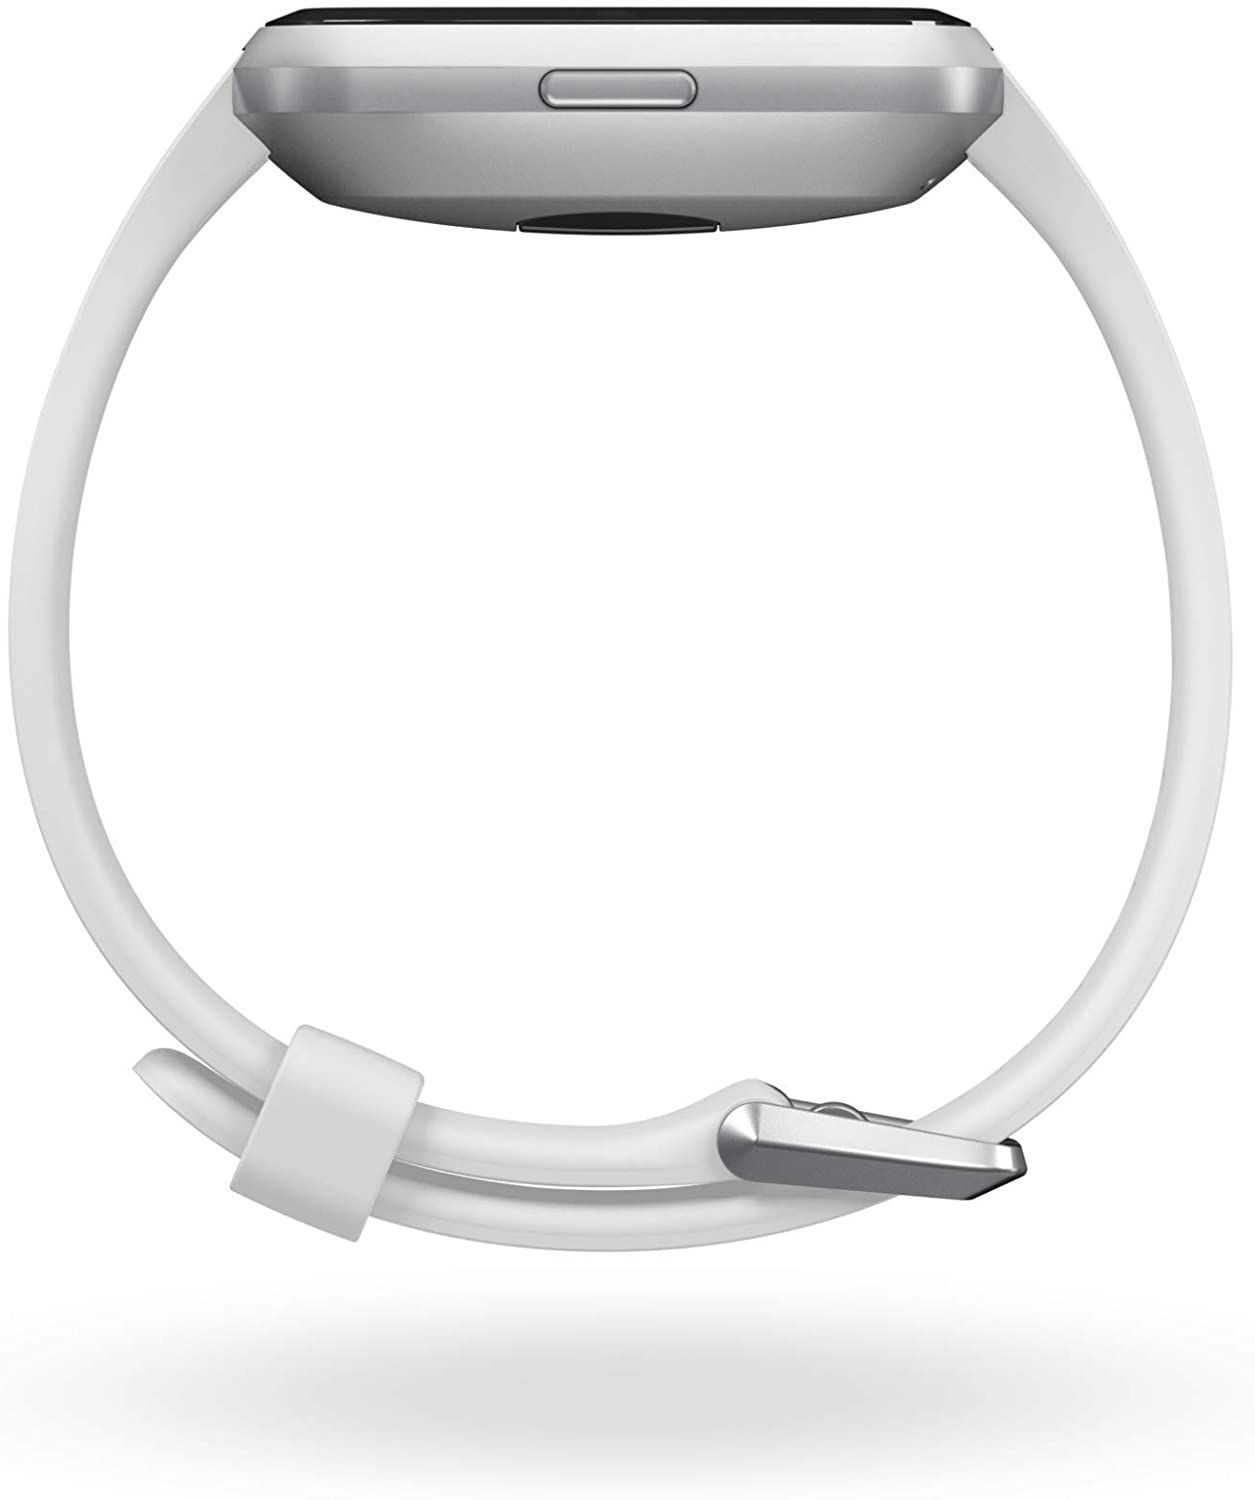 Fitbit Versa Lite smartwatch side profile